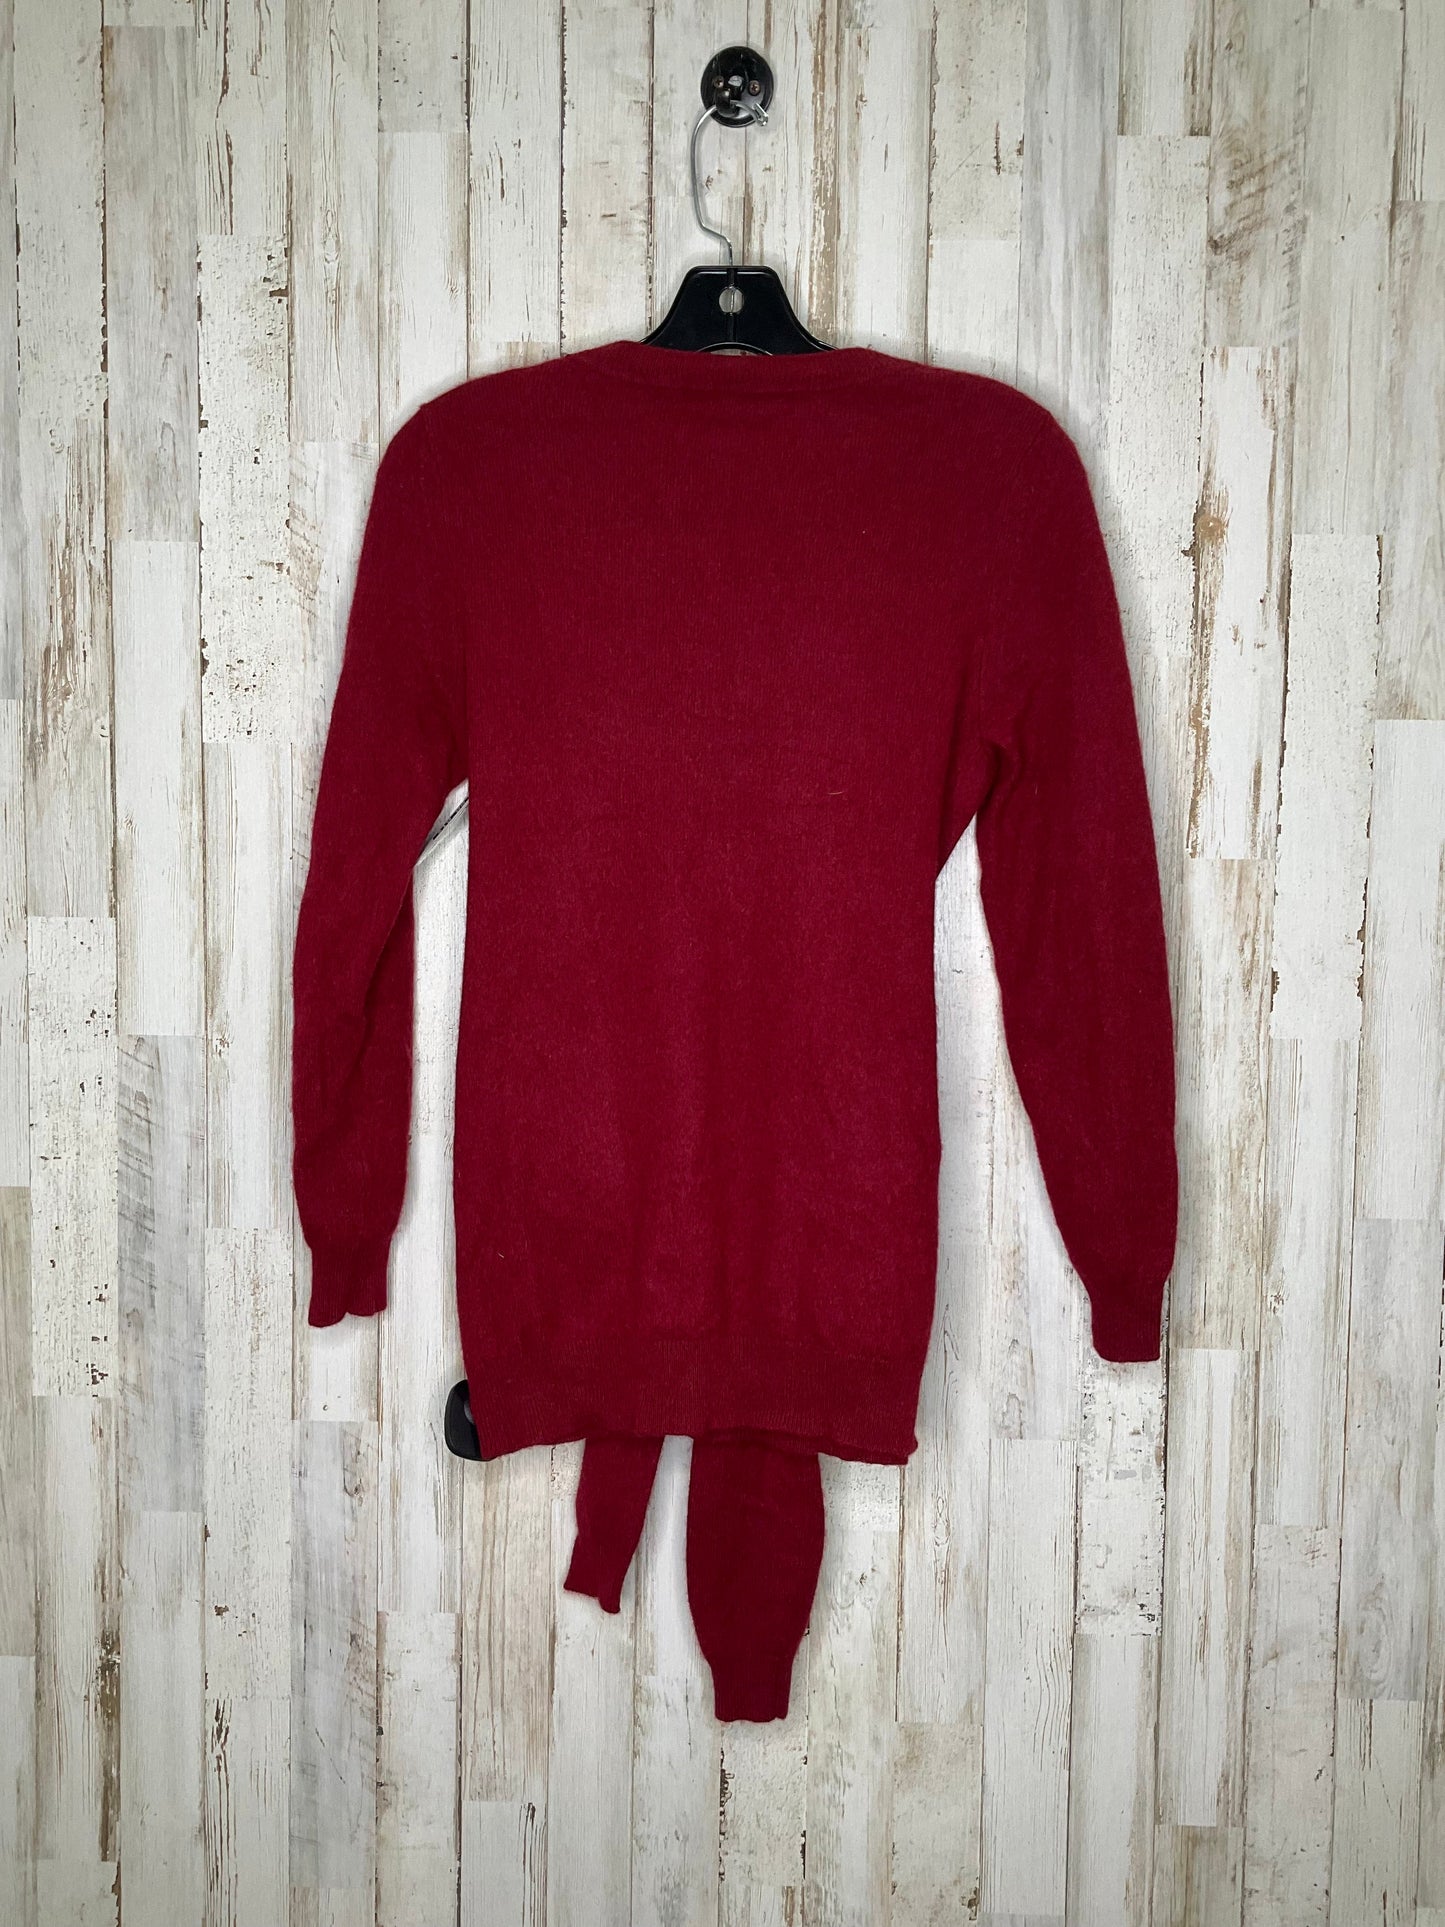 Sweater By Antonio Melani  Size: Xs